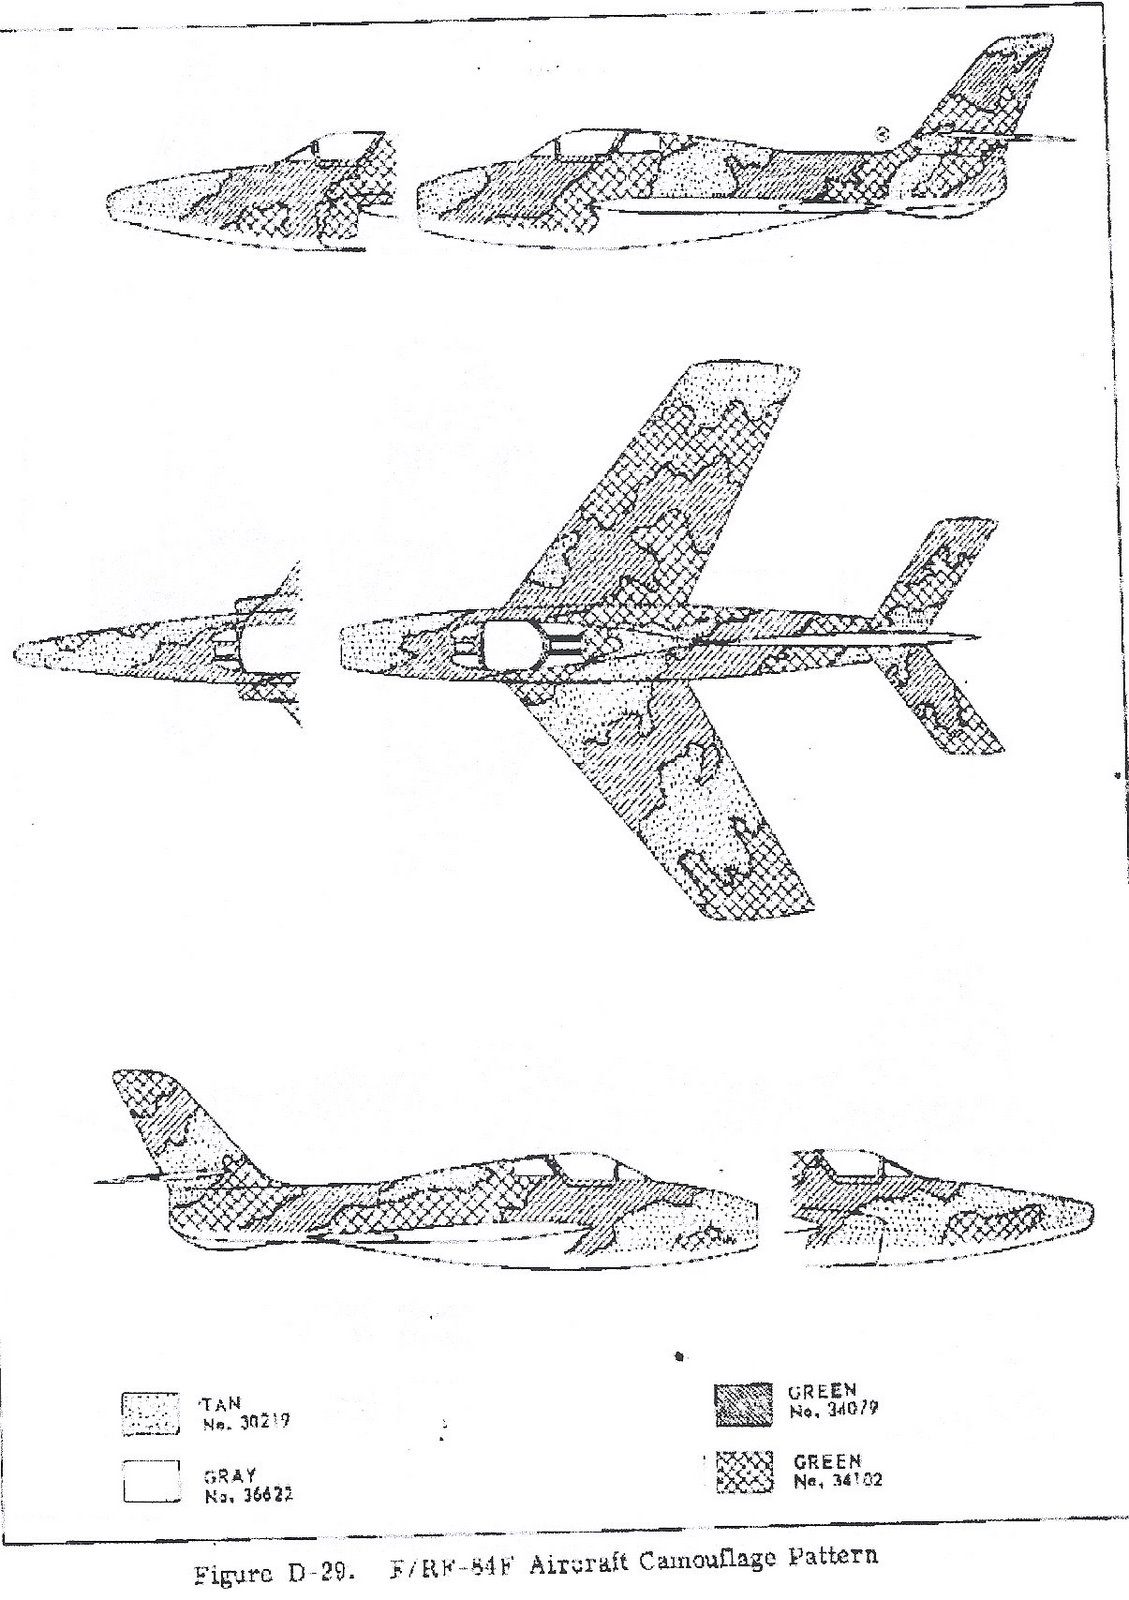 [F-84F+camo.jpg]